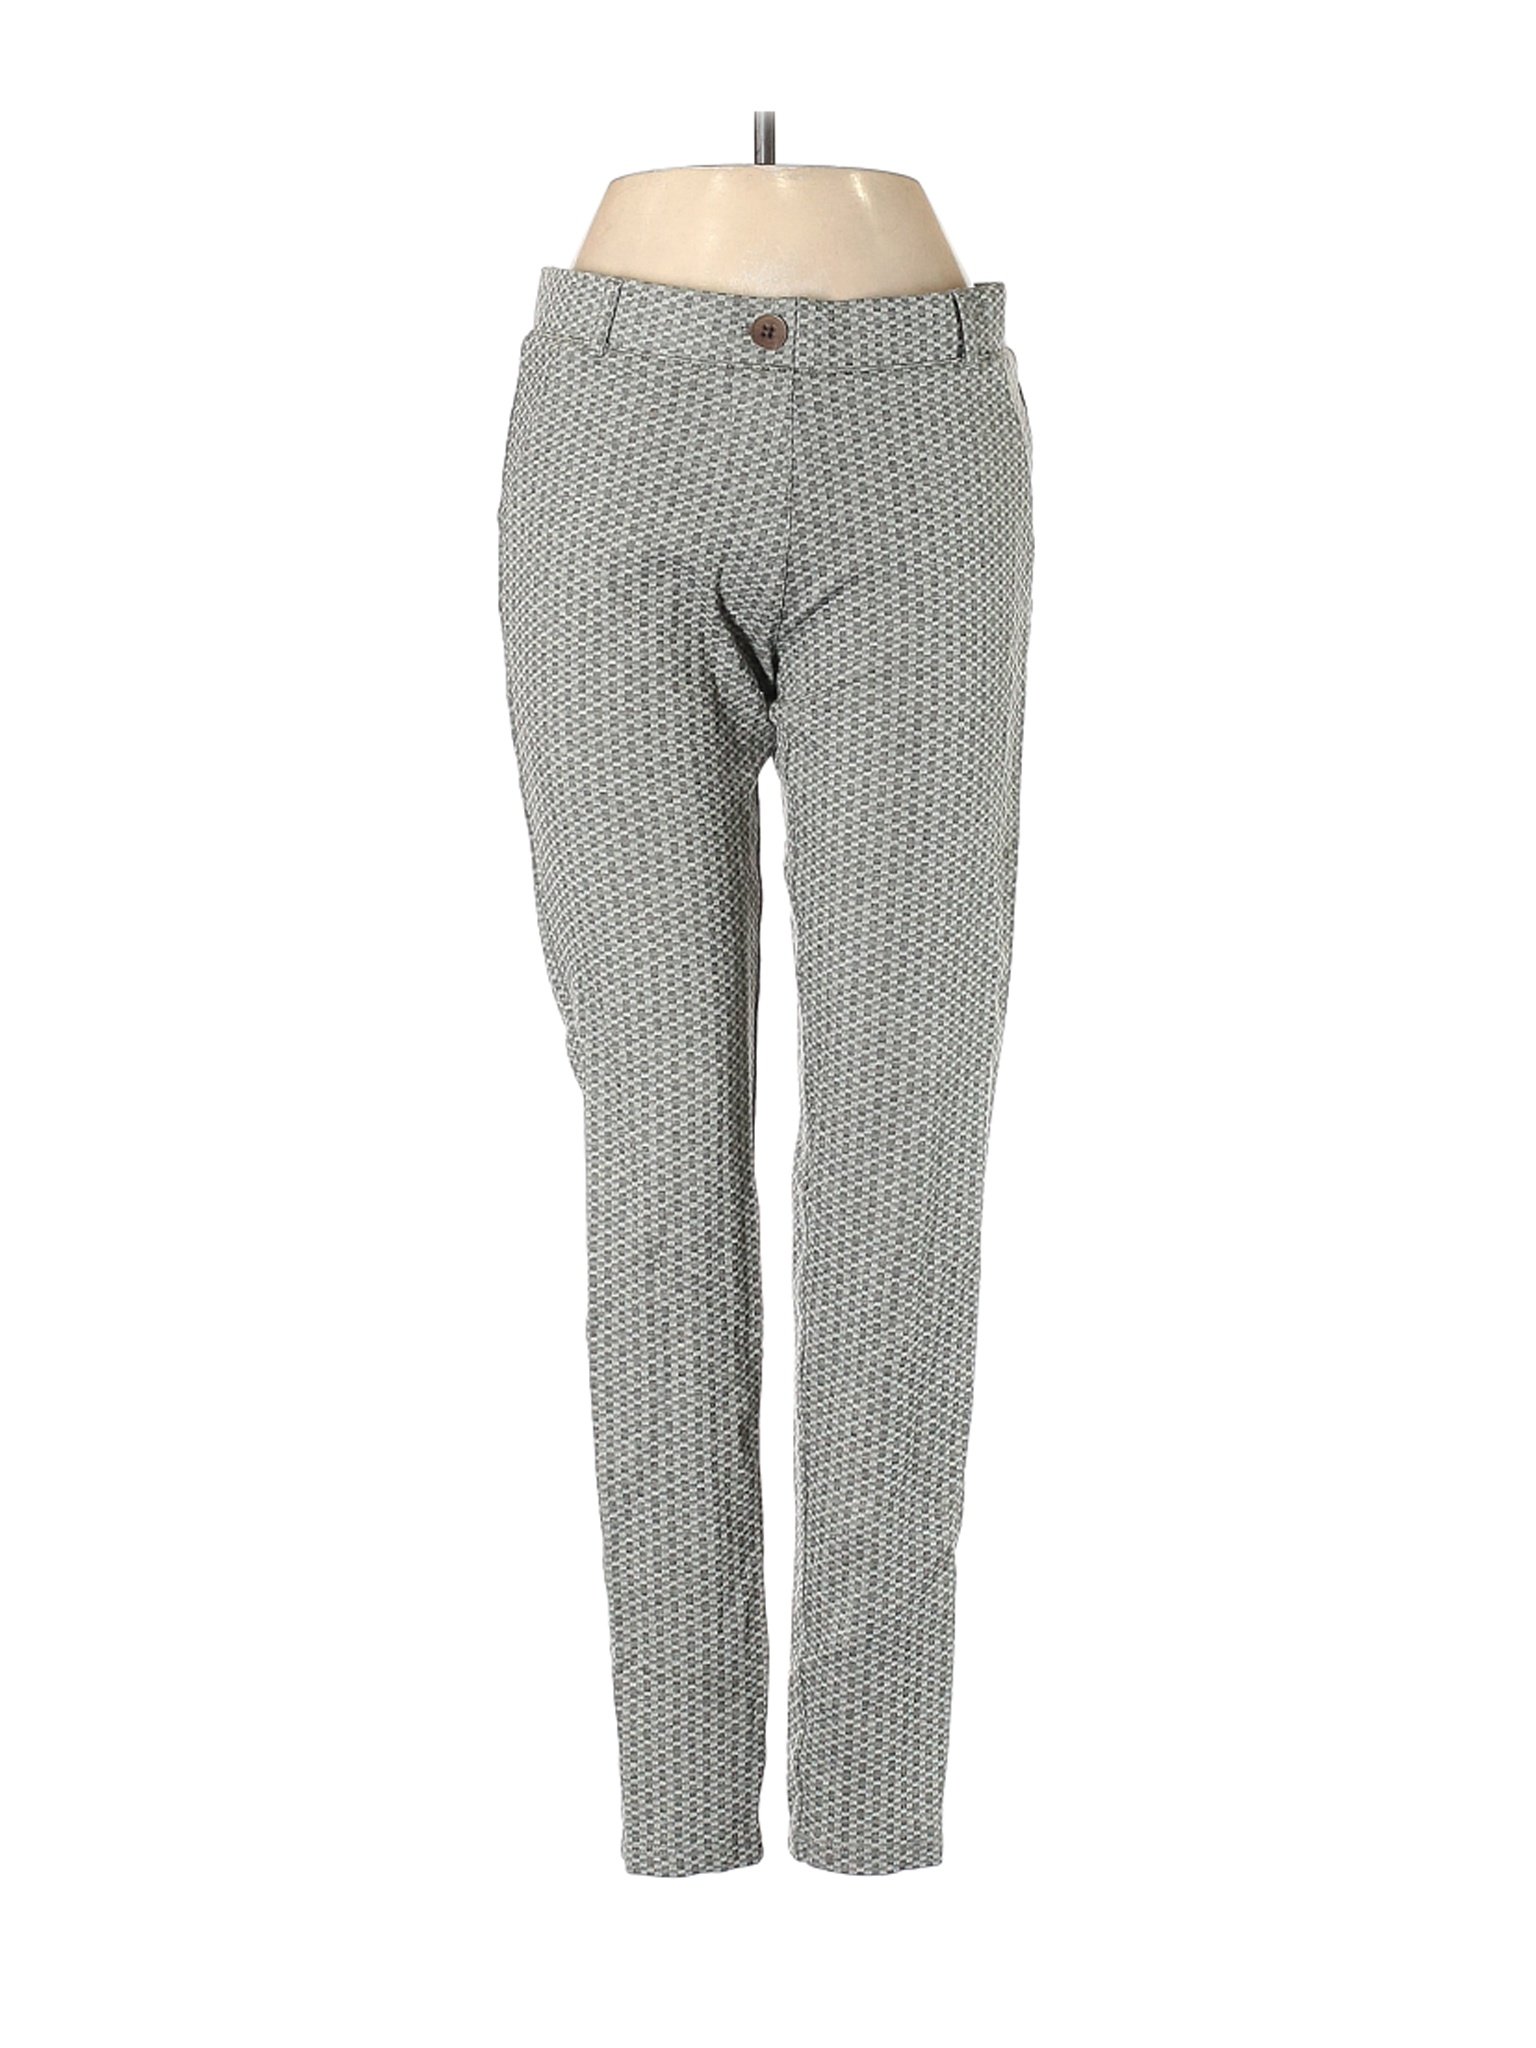 Betabrand Women Gray Casual Pants S Tall | eBay